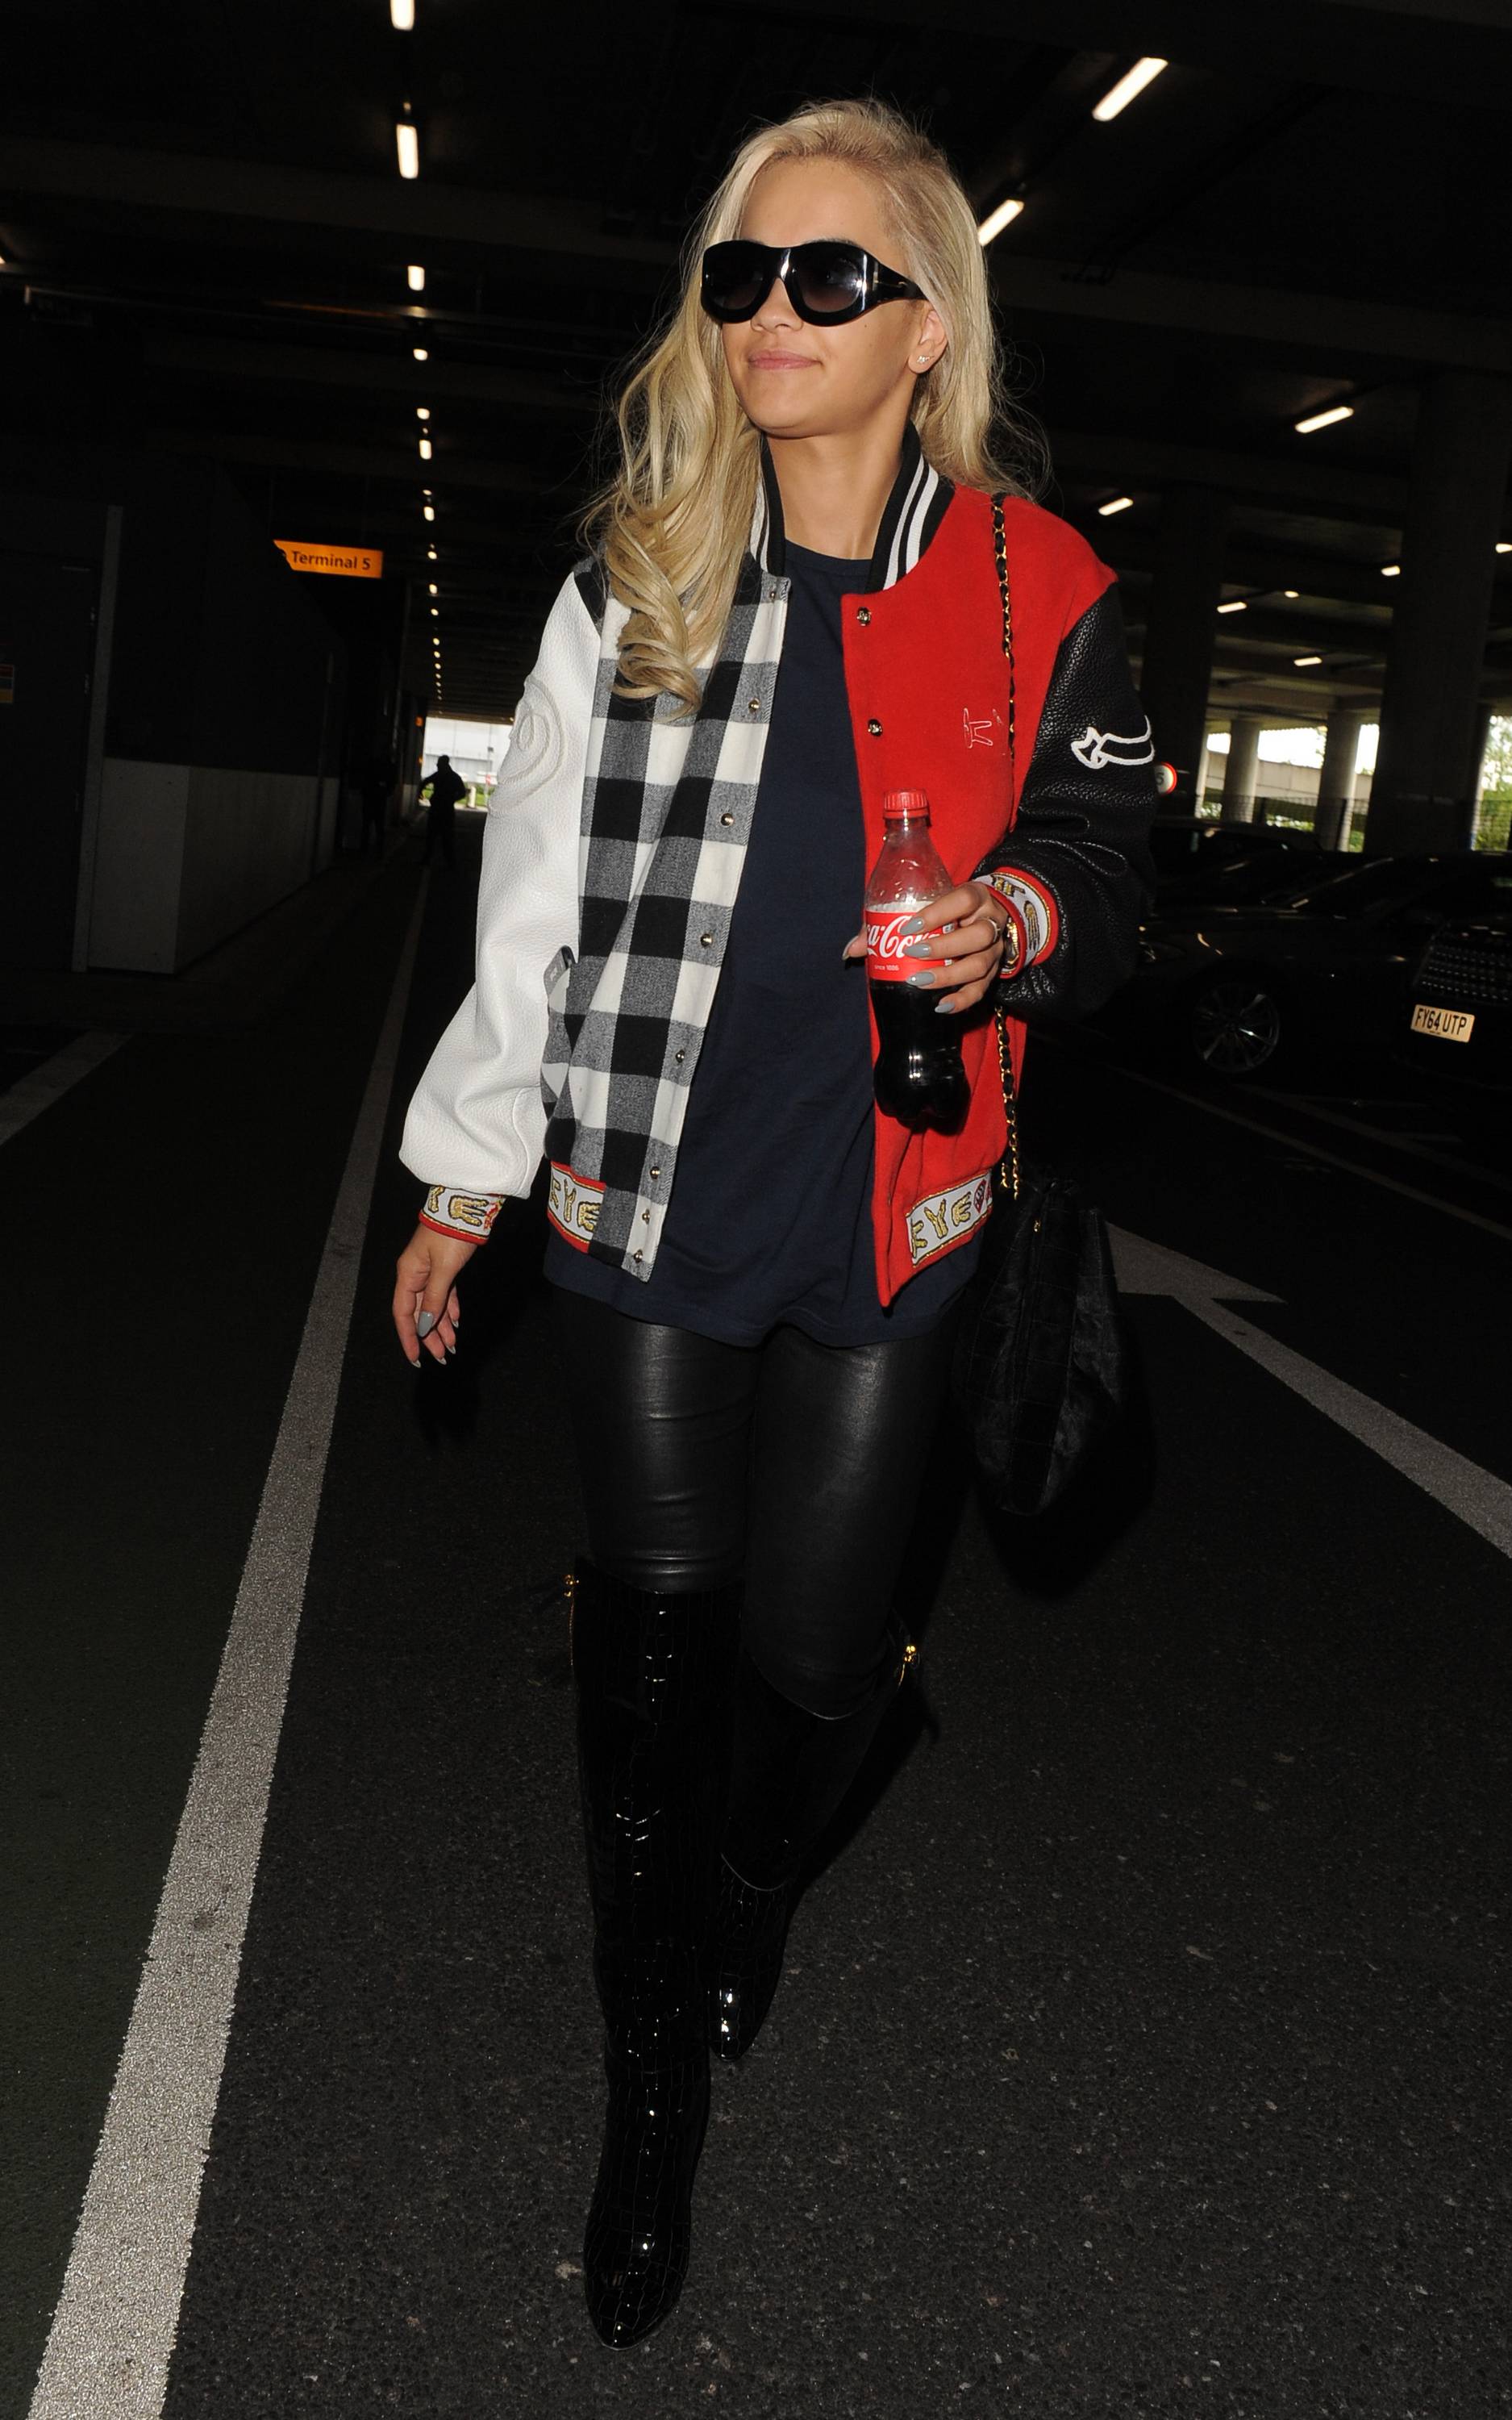 Rita Ora arrives at Heathrow Airport